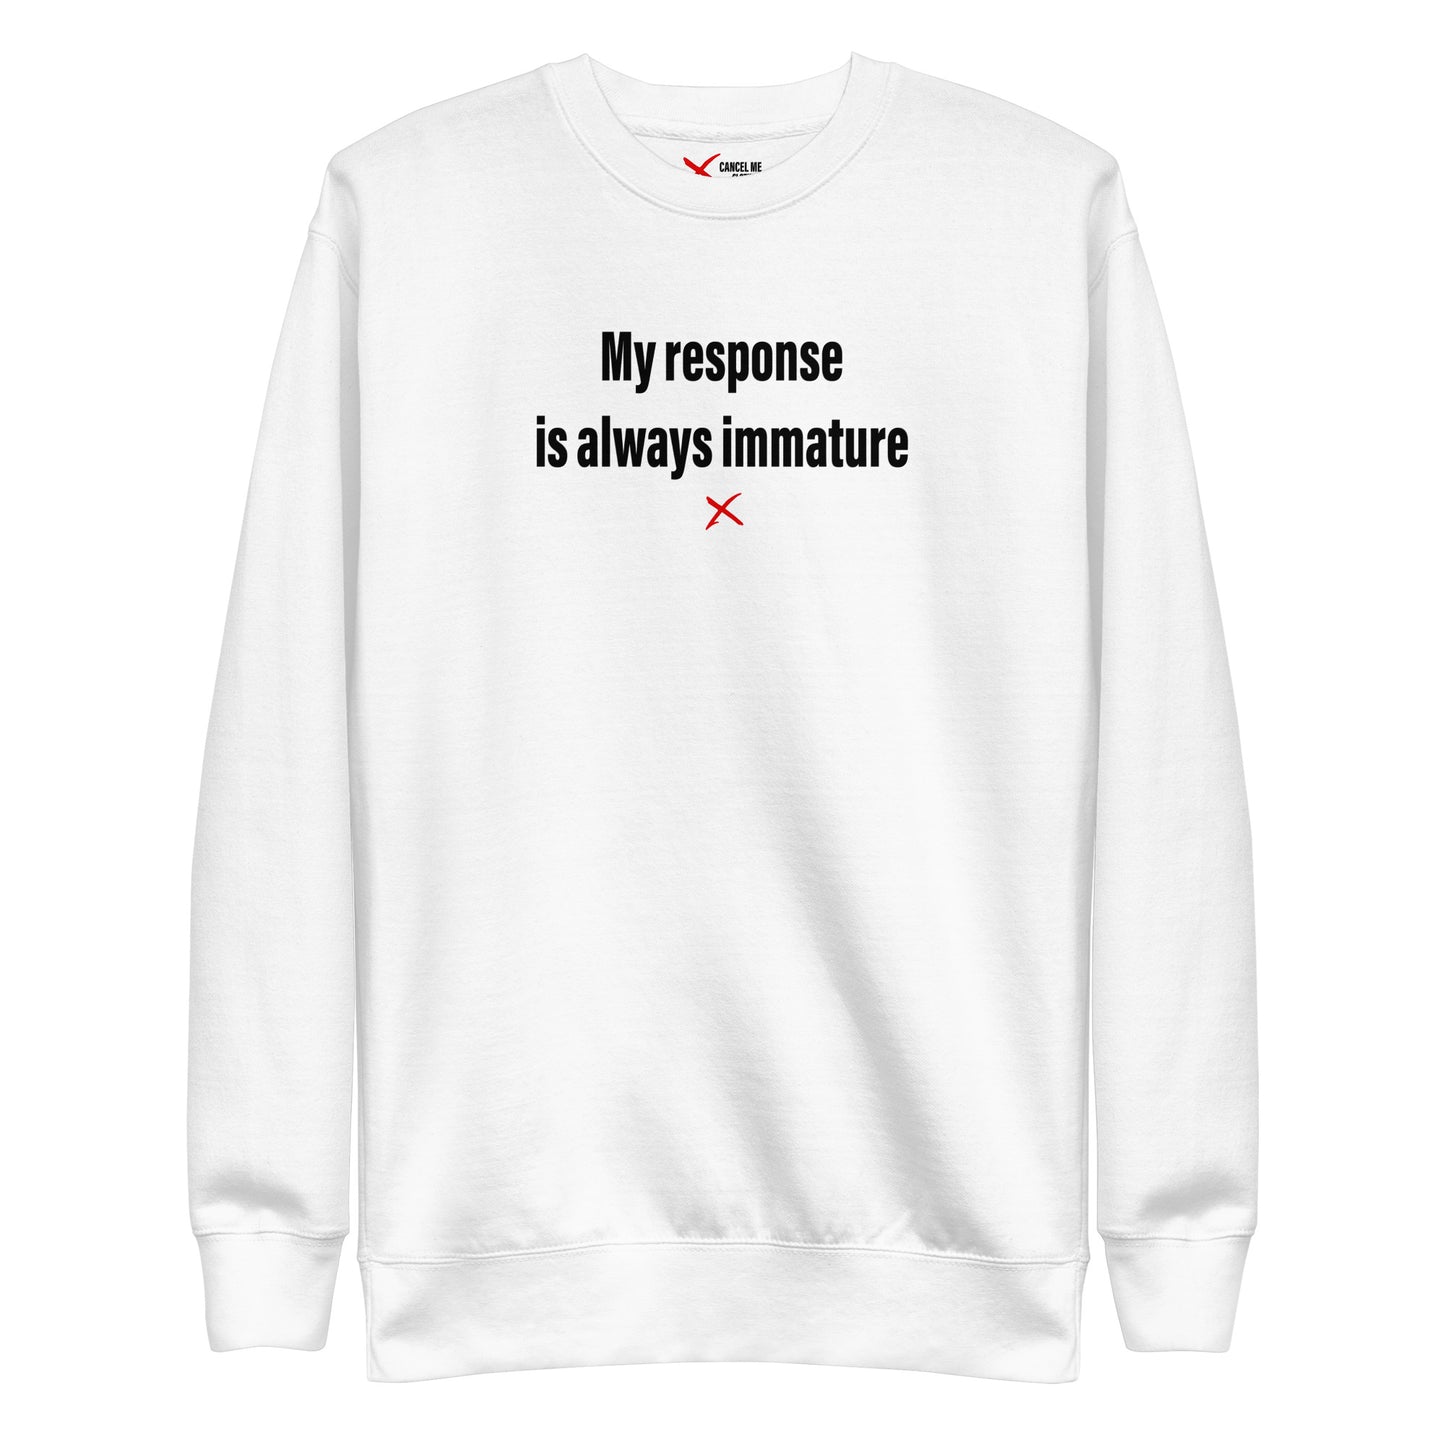 My response is always immature - Sweatshirt